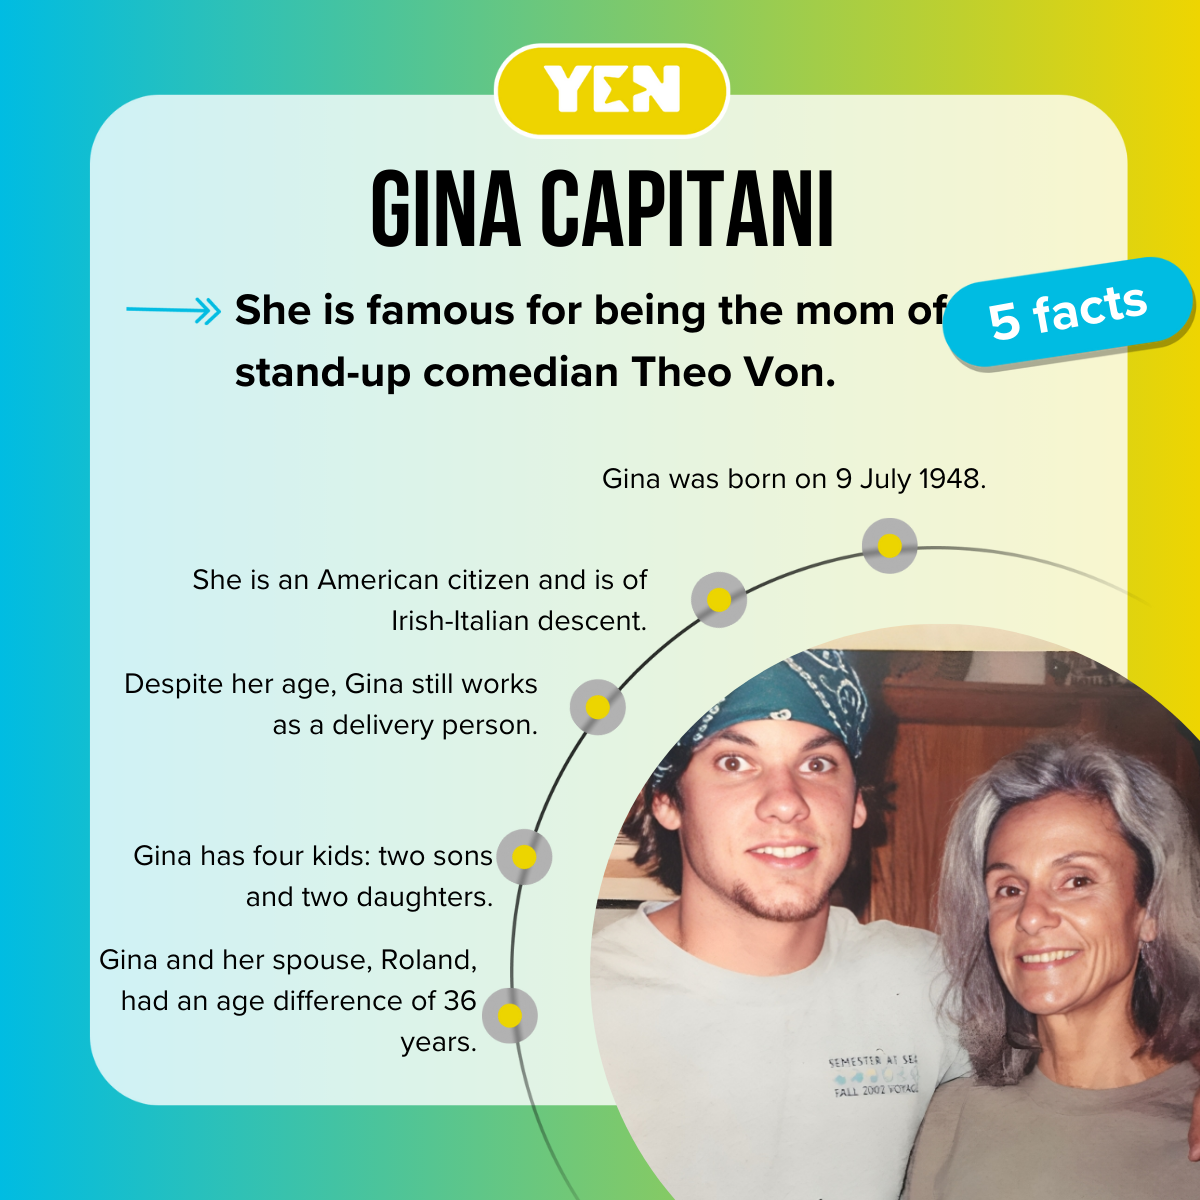 5 facts about Gina Capitani